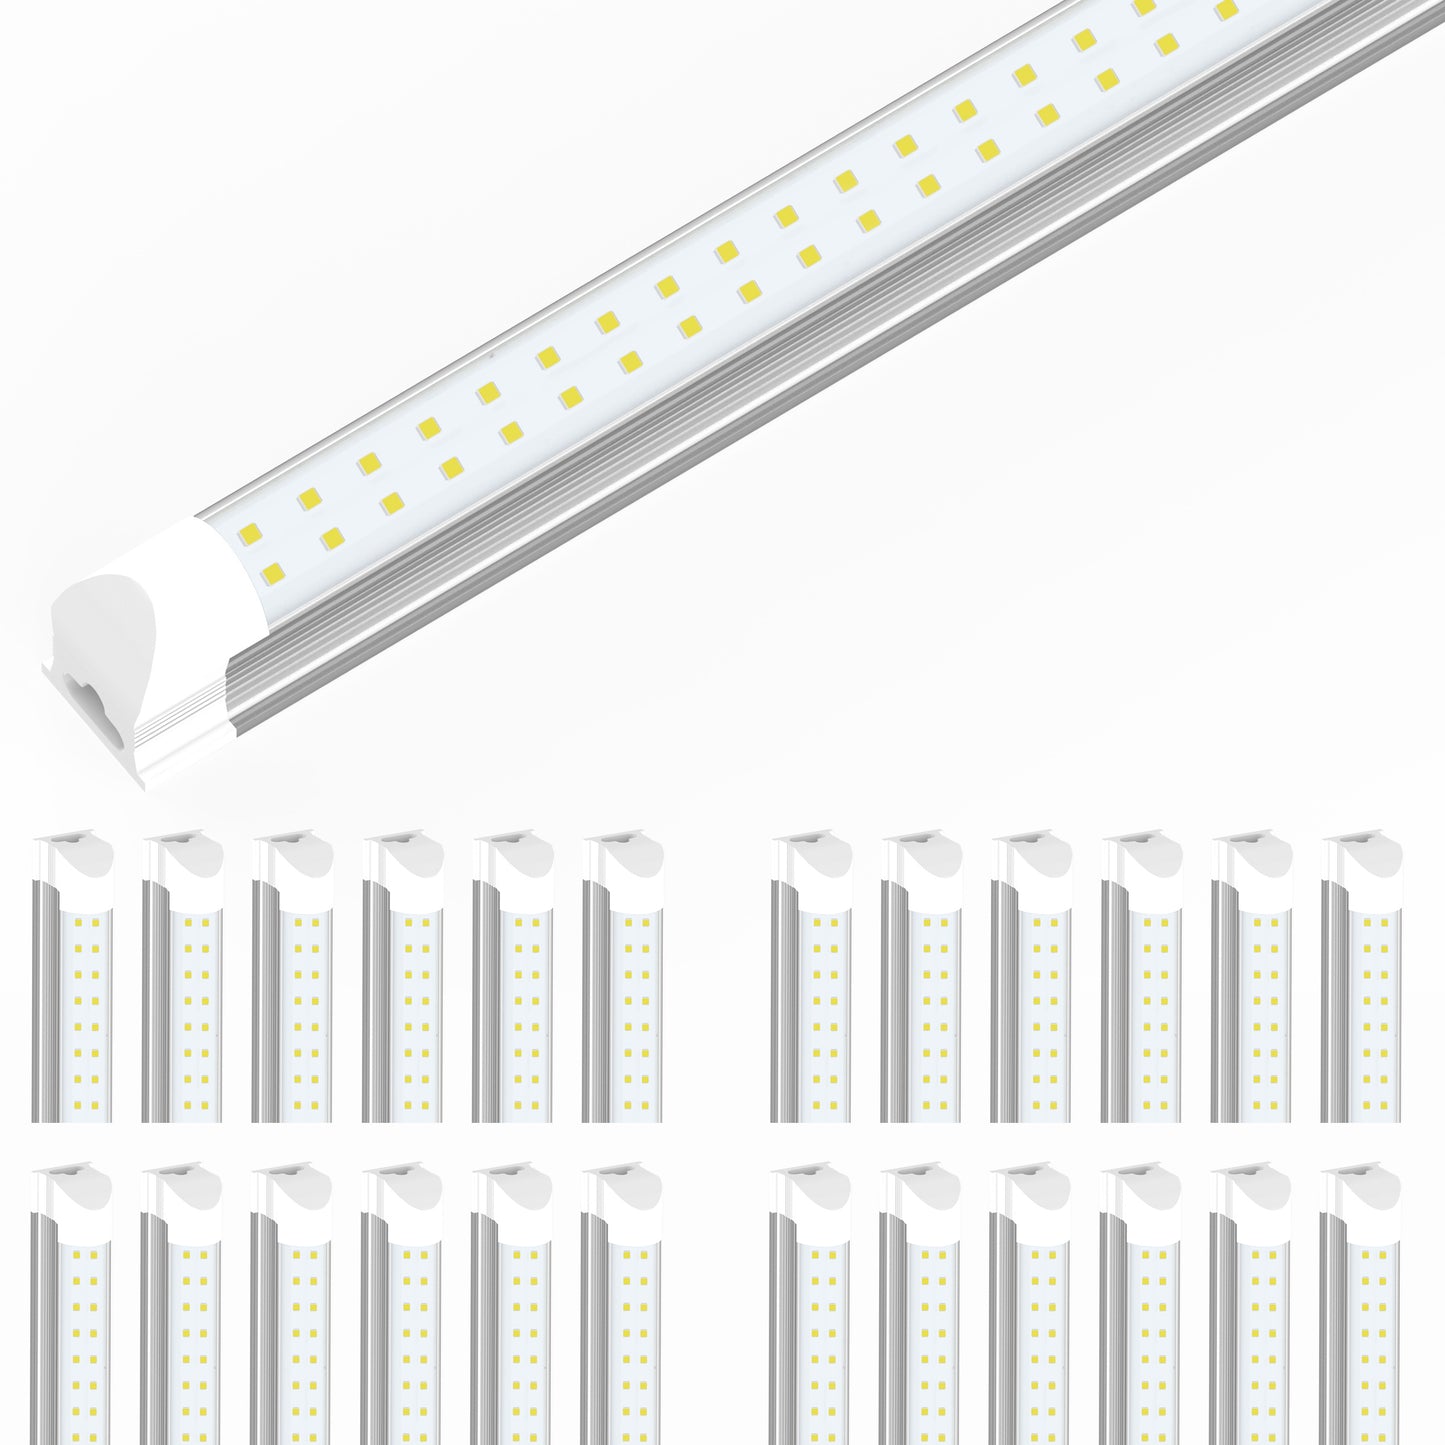 2ft T8 Integrated LED Tube Light, 2 Row Flat, 10W, 6500K, 1200LM, Clear, AC 100-277V, Linkable, Plug & Play, 180° Beam angle